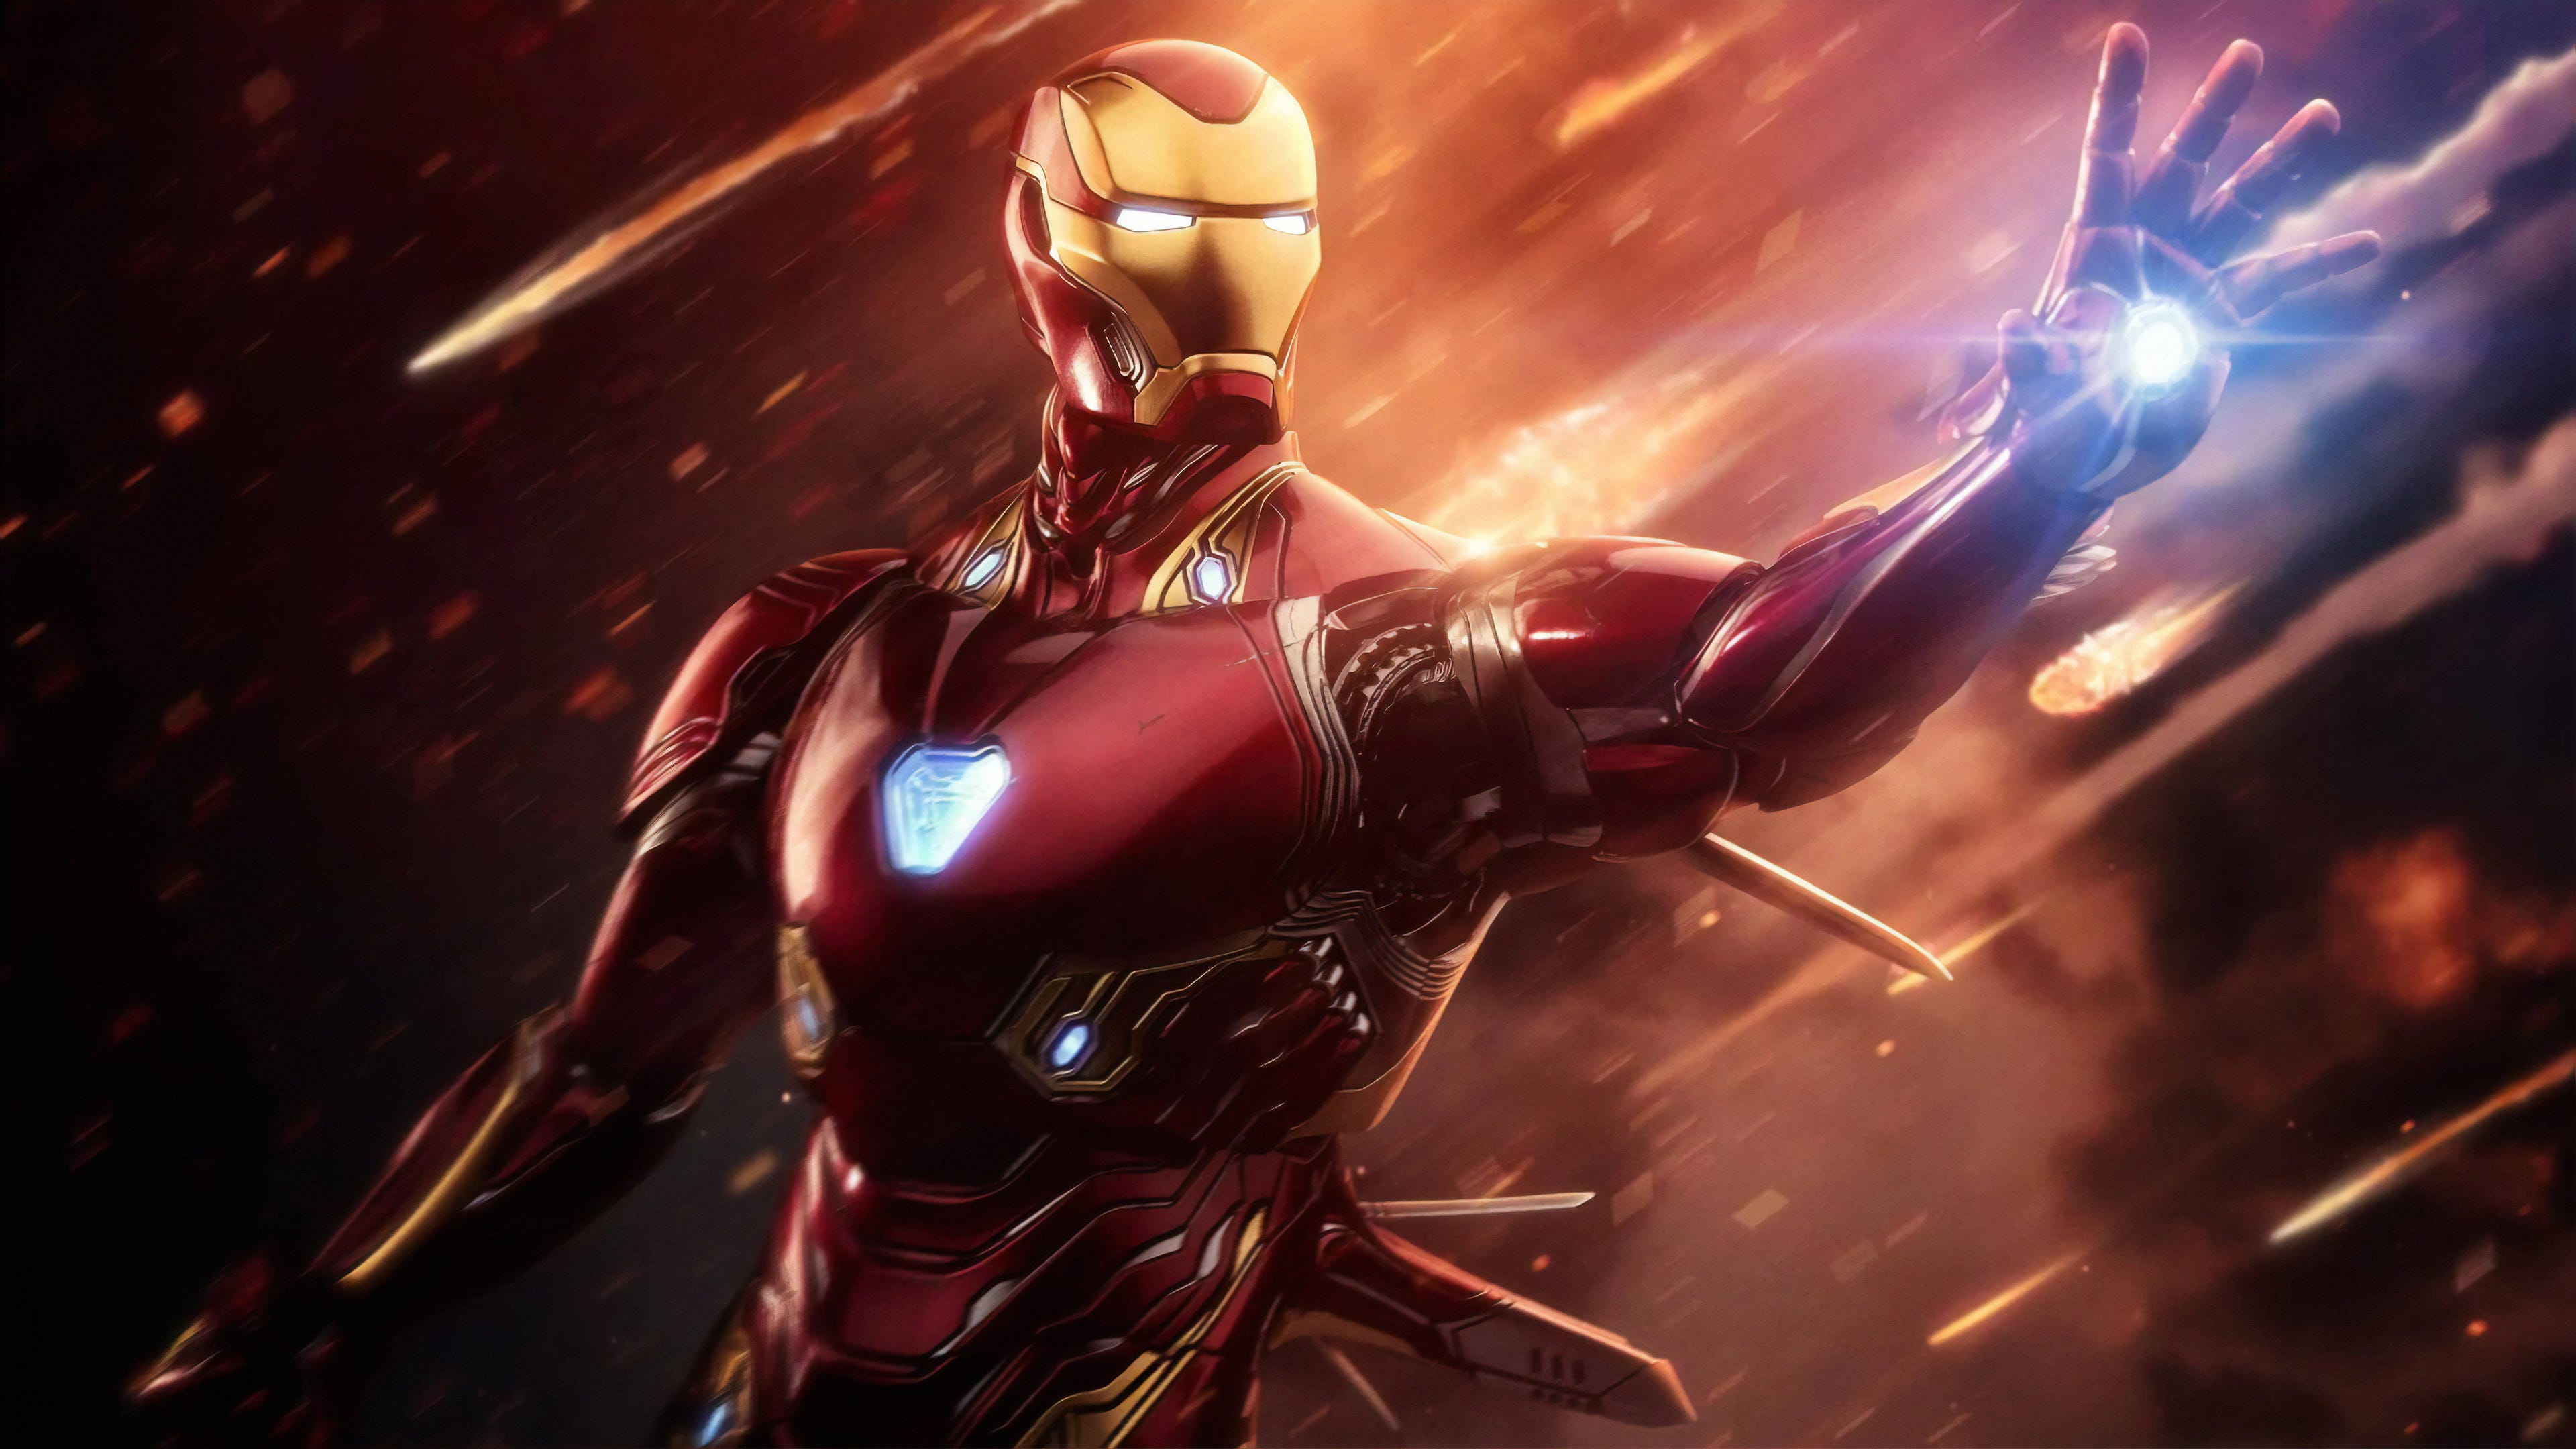 4k New Iron Man 2019 wallpaper | by HDwallpaper. co | Medium